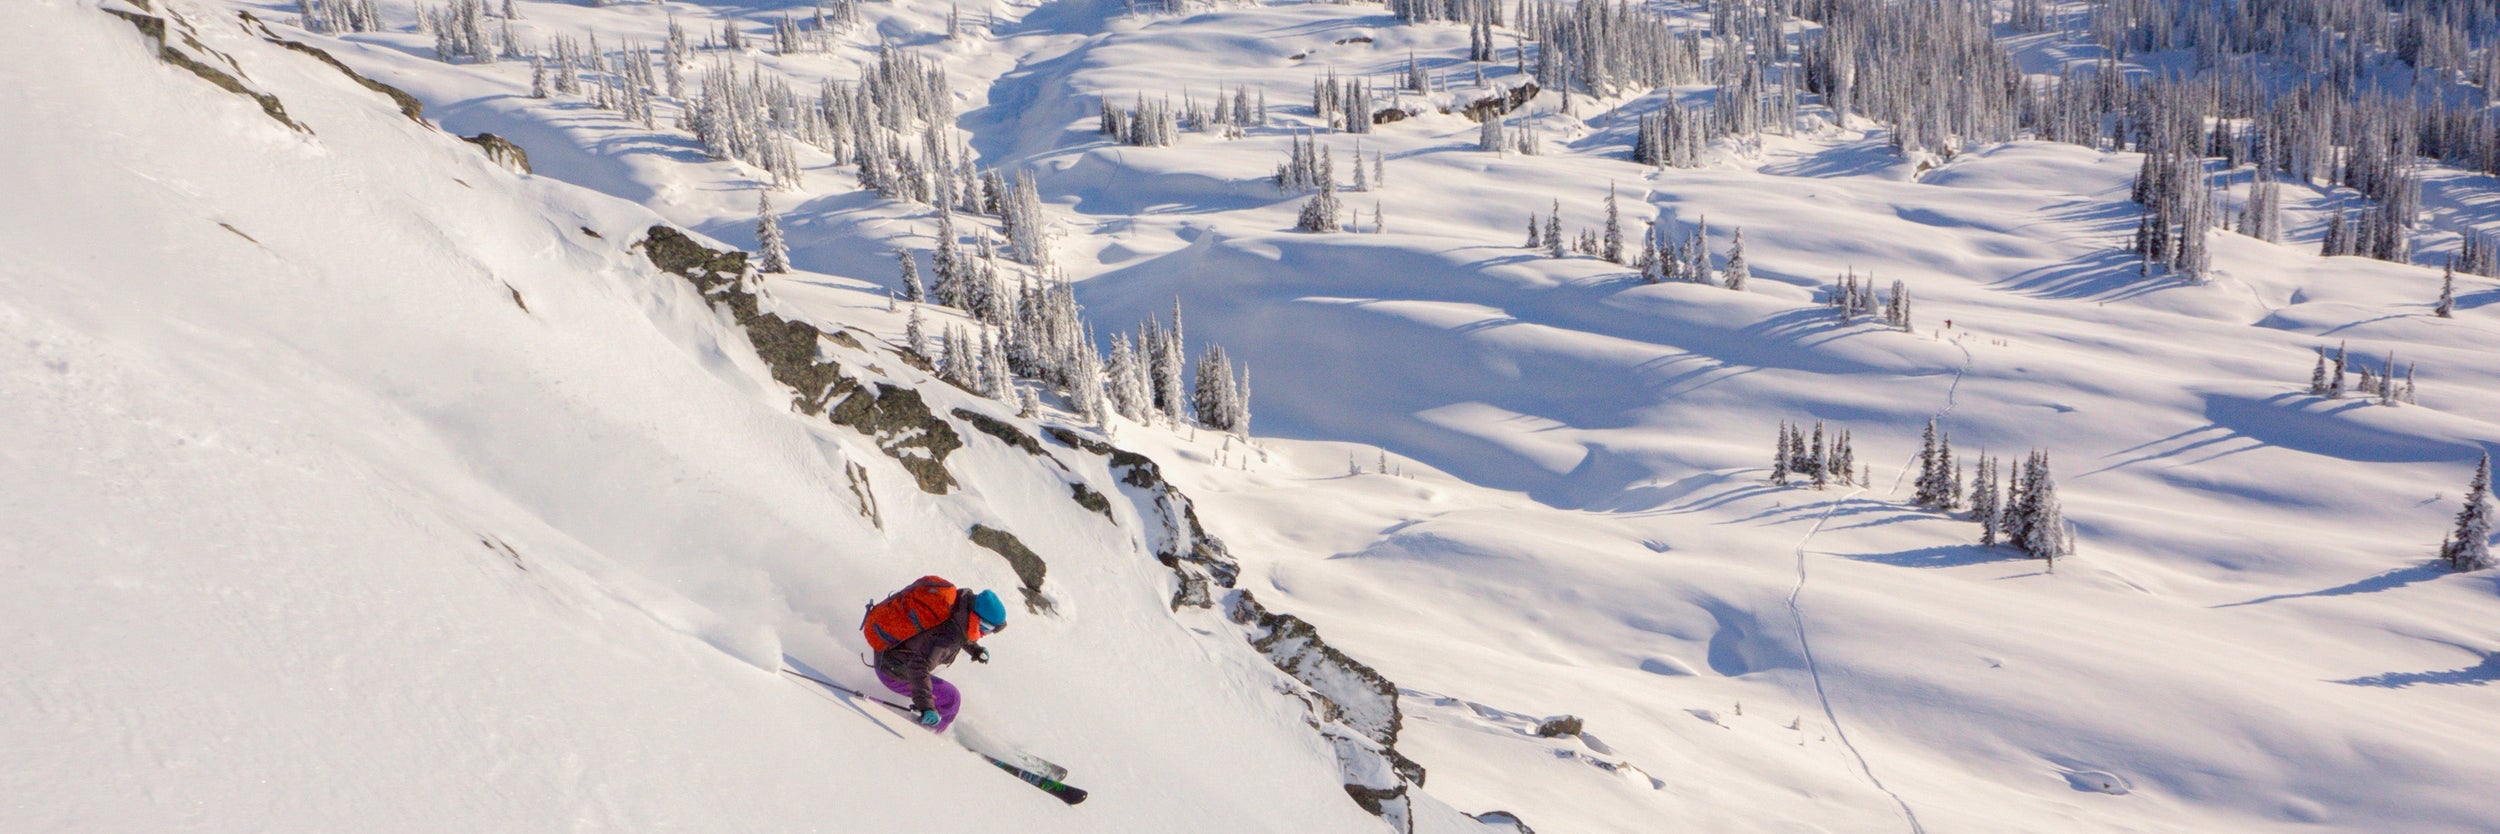  Skiing Powder and slashing turns in British Columbia’s Monashee Range on a BC Lodge Ski touring Week at Sol Mountain Lodge